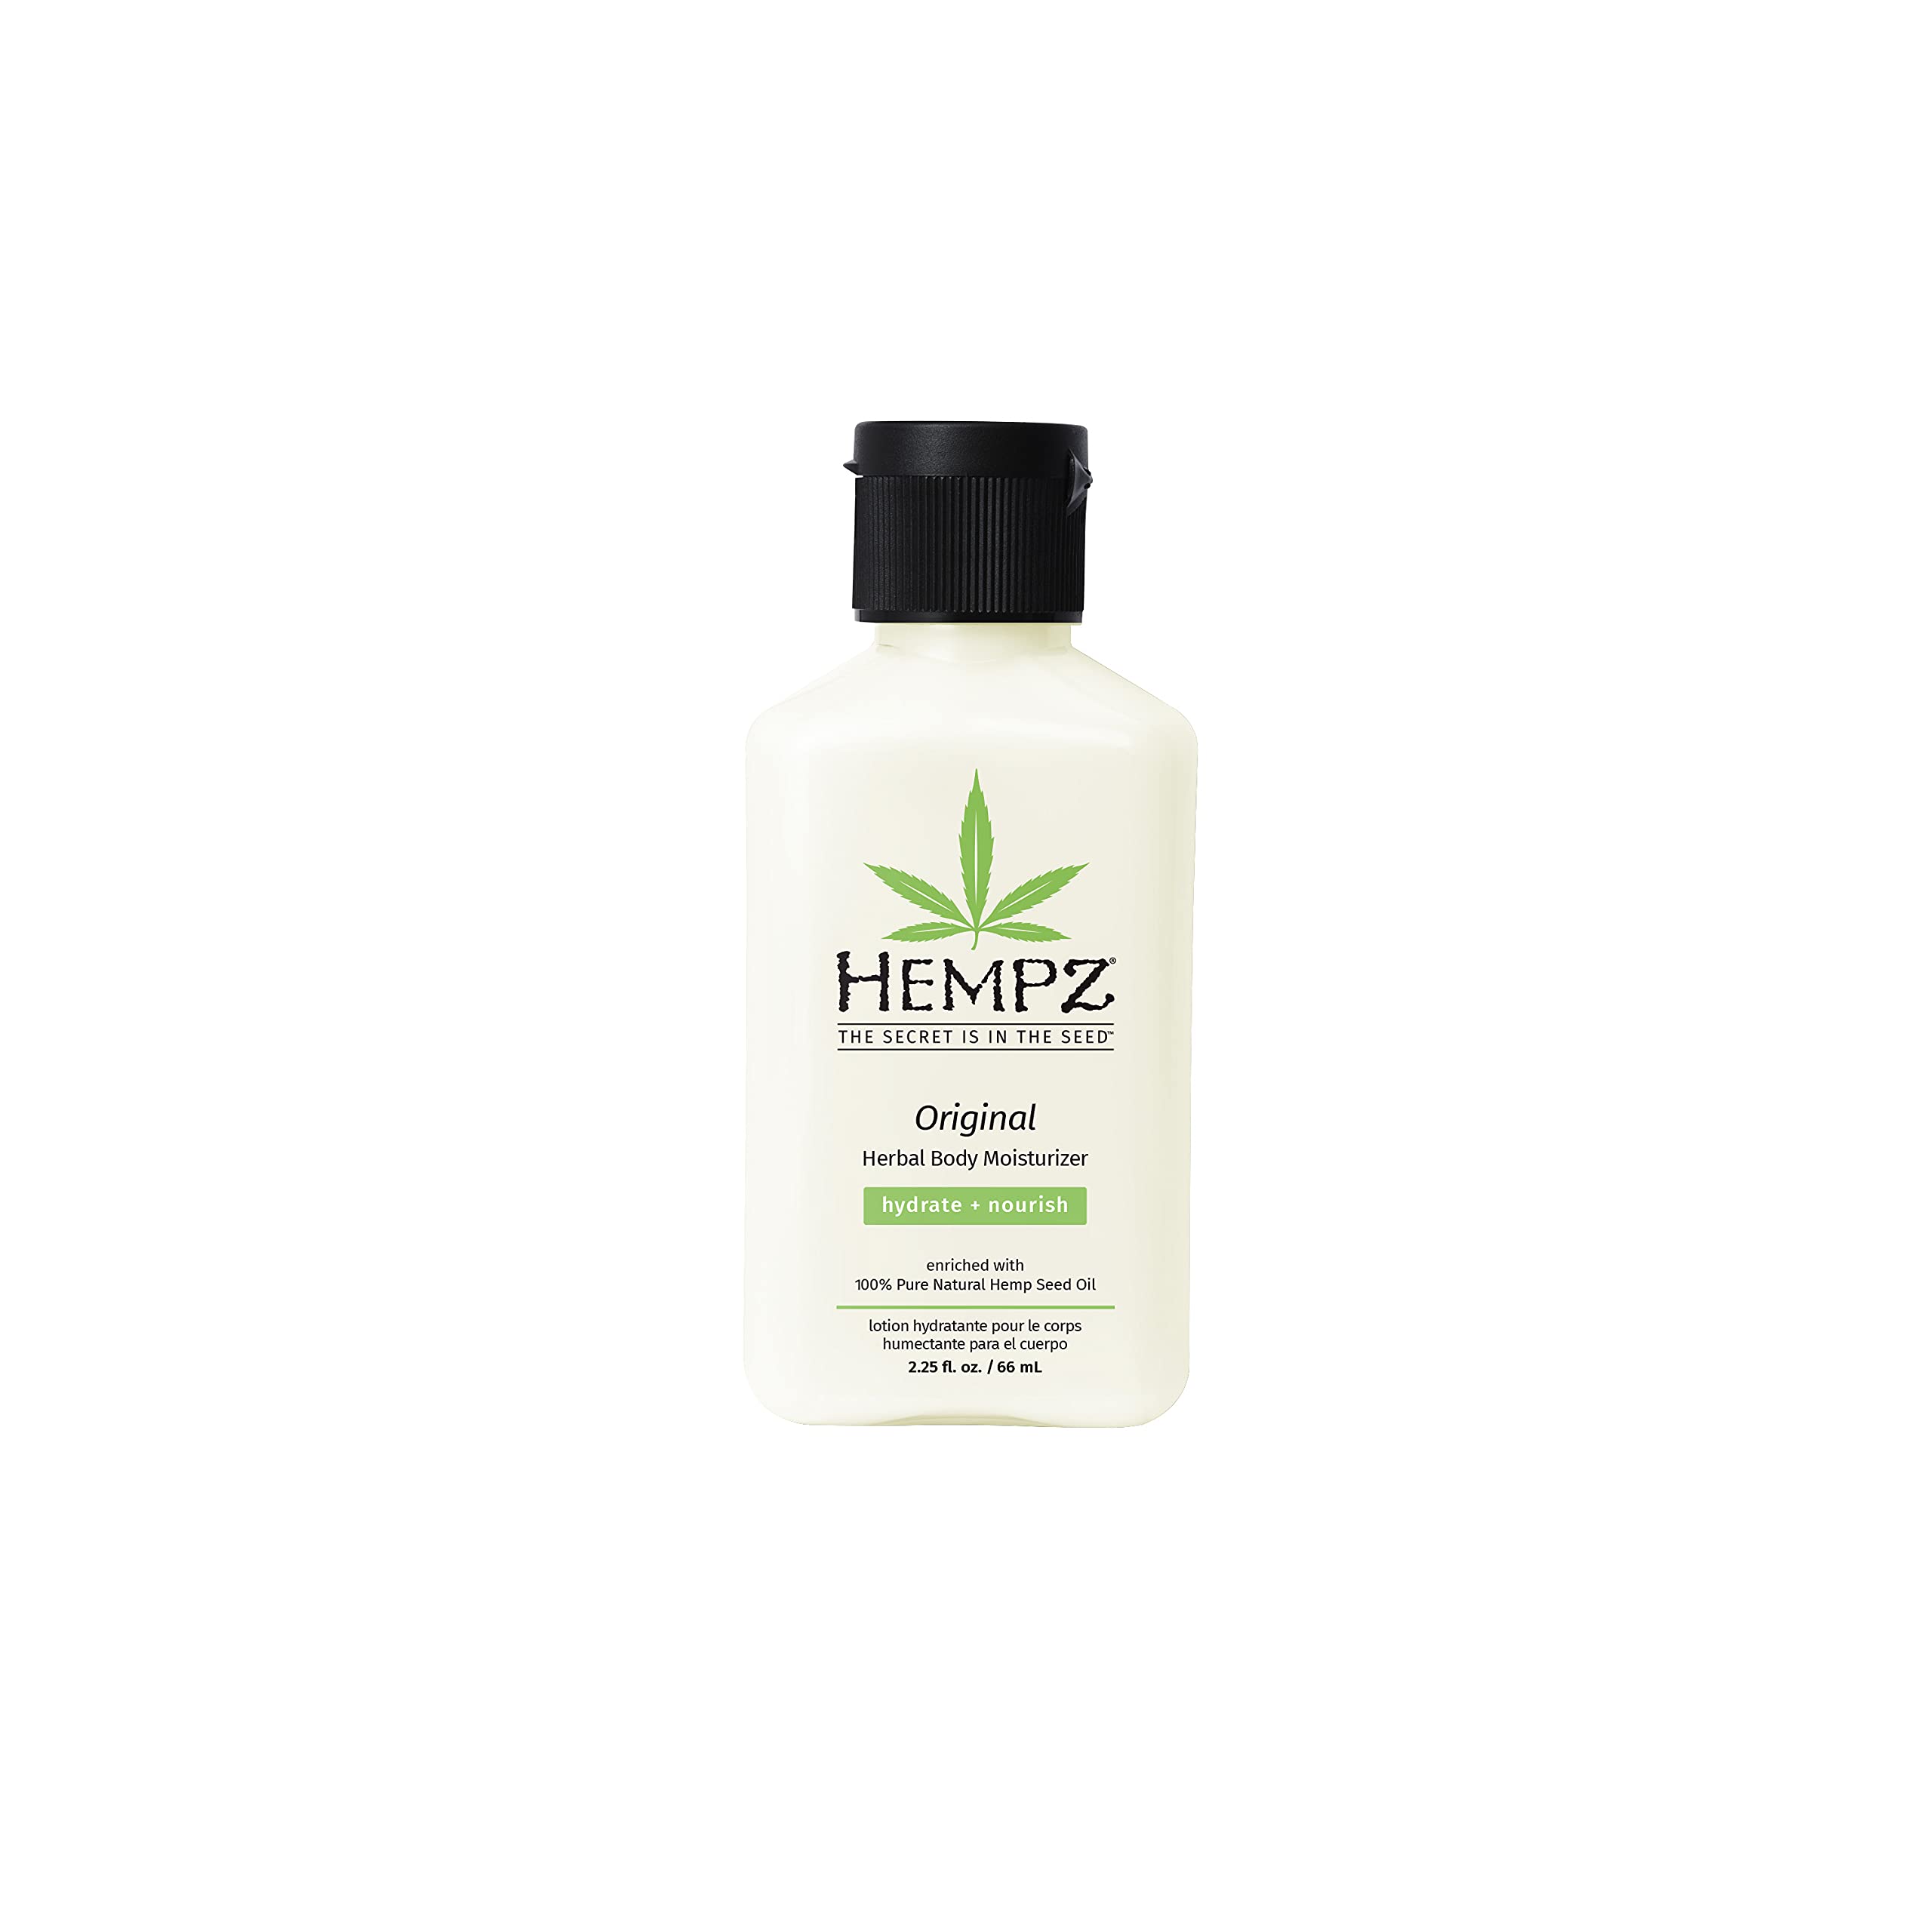 Hempz Original Herbal Body Moisturizer, 2.25 Fluid Ounce